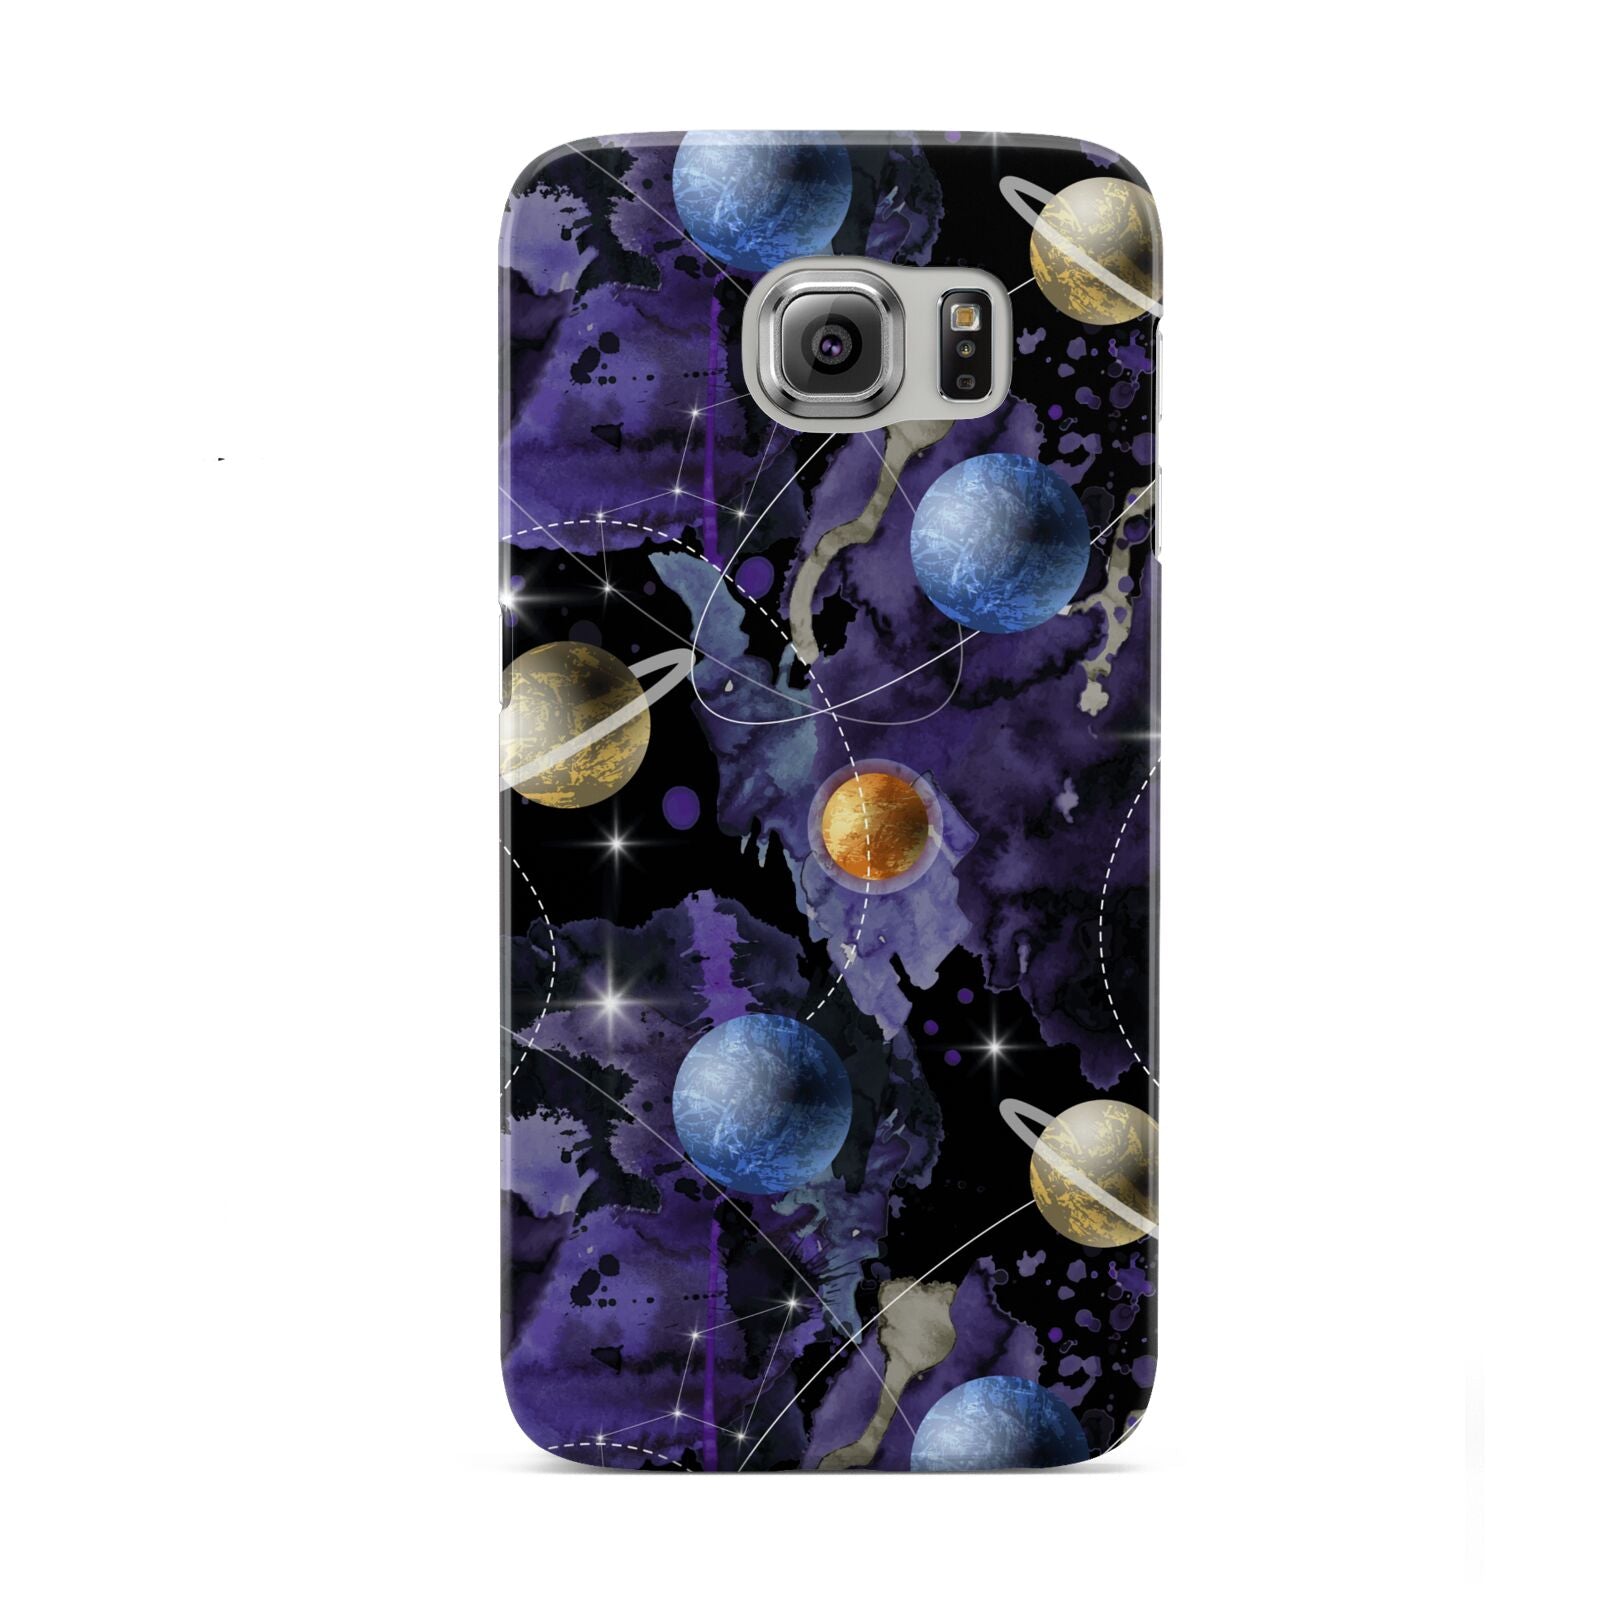 Planet Samsung Galaxy S6 Case